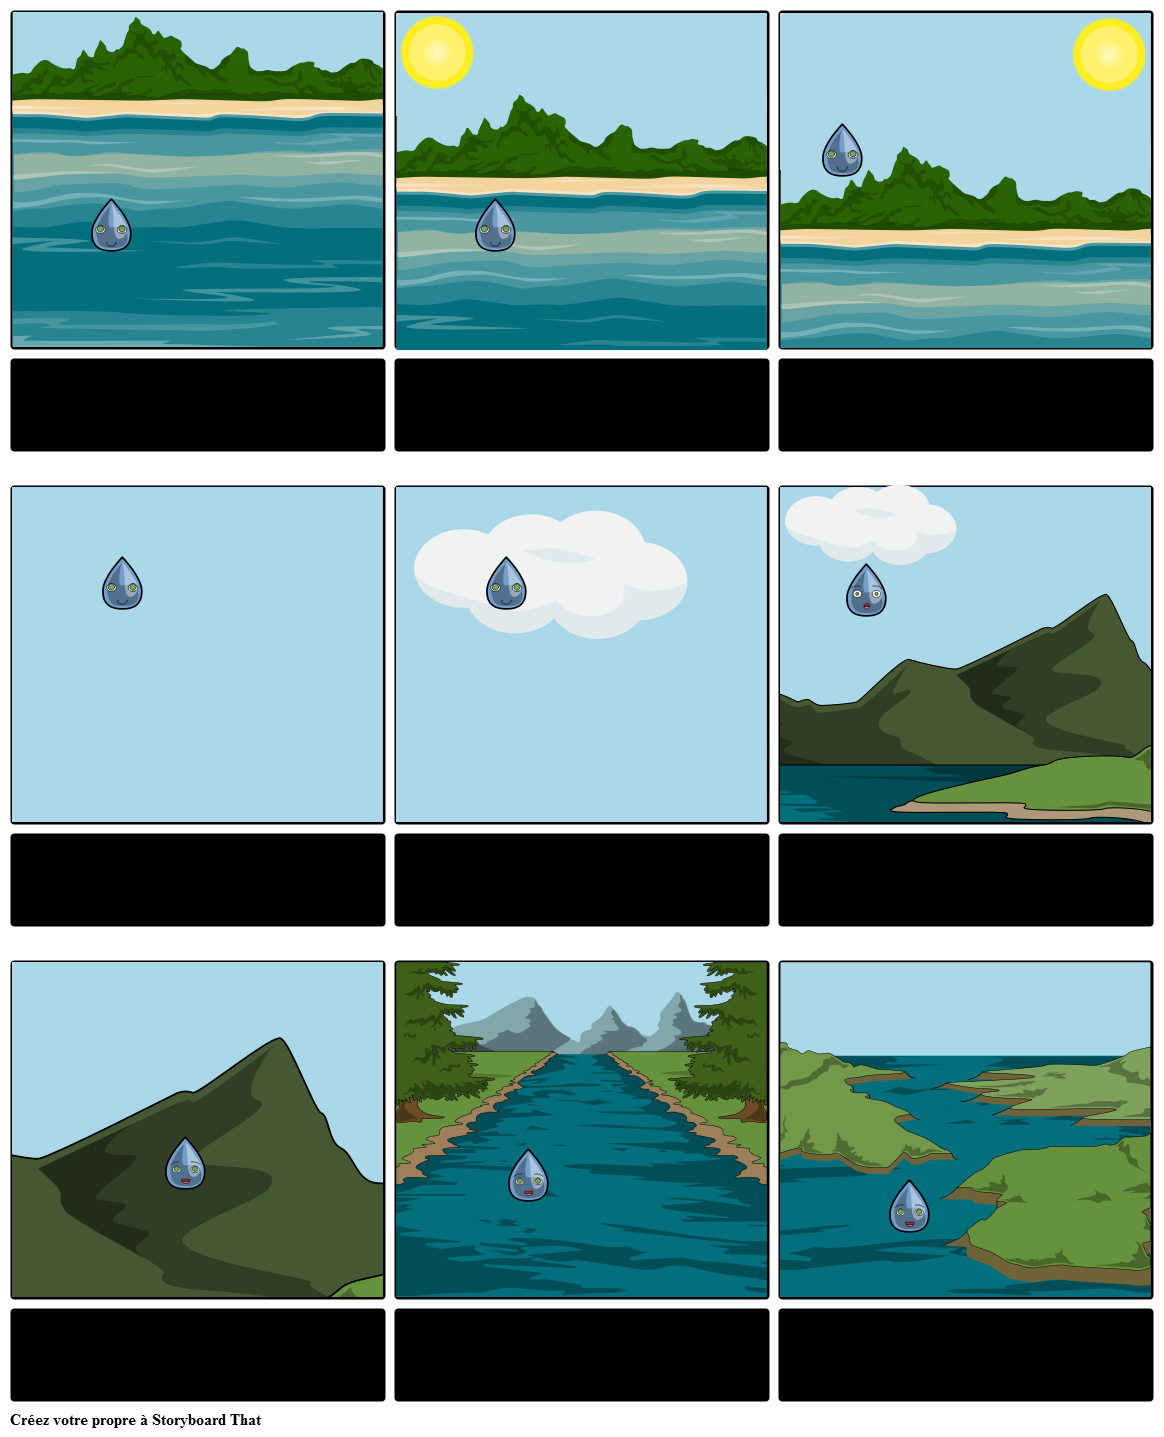 Narrative du Cycle de L'eau